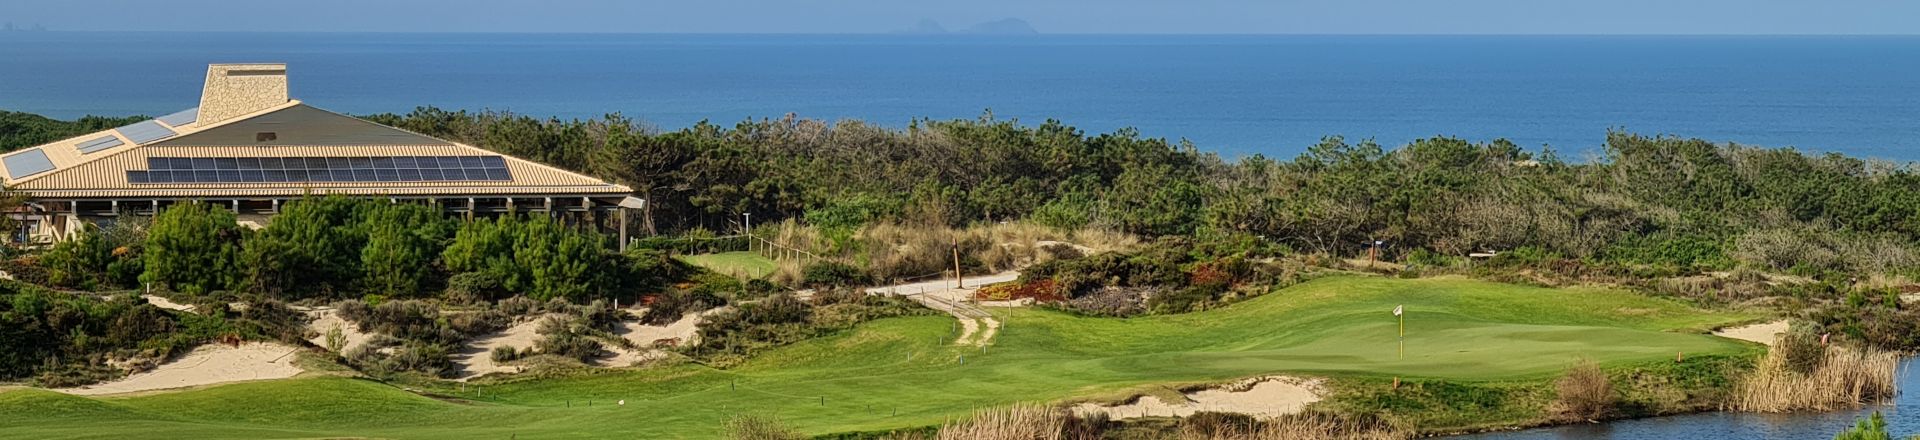 West Cliffs Golf Course in Lisbon